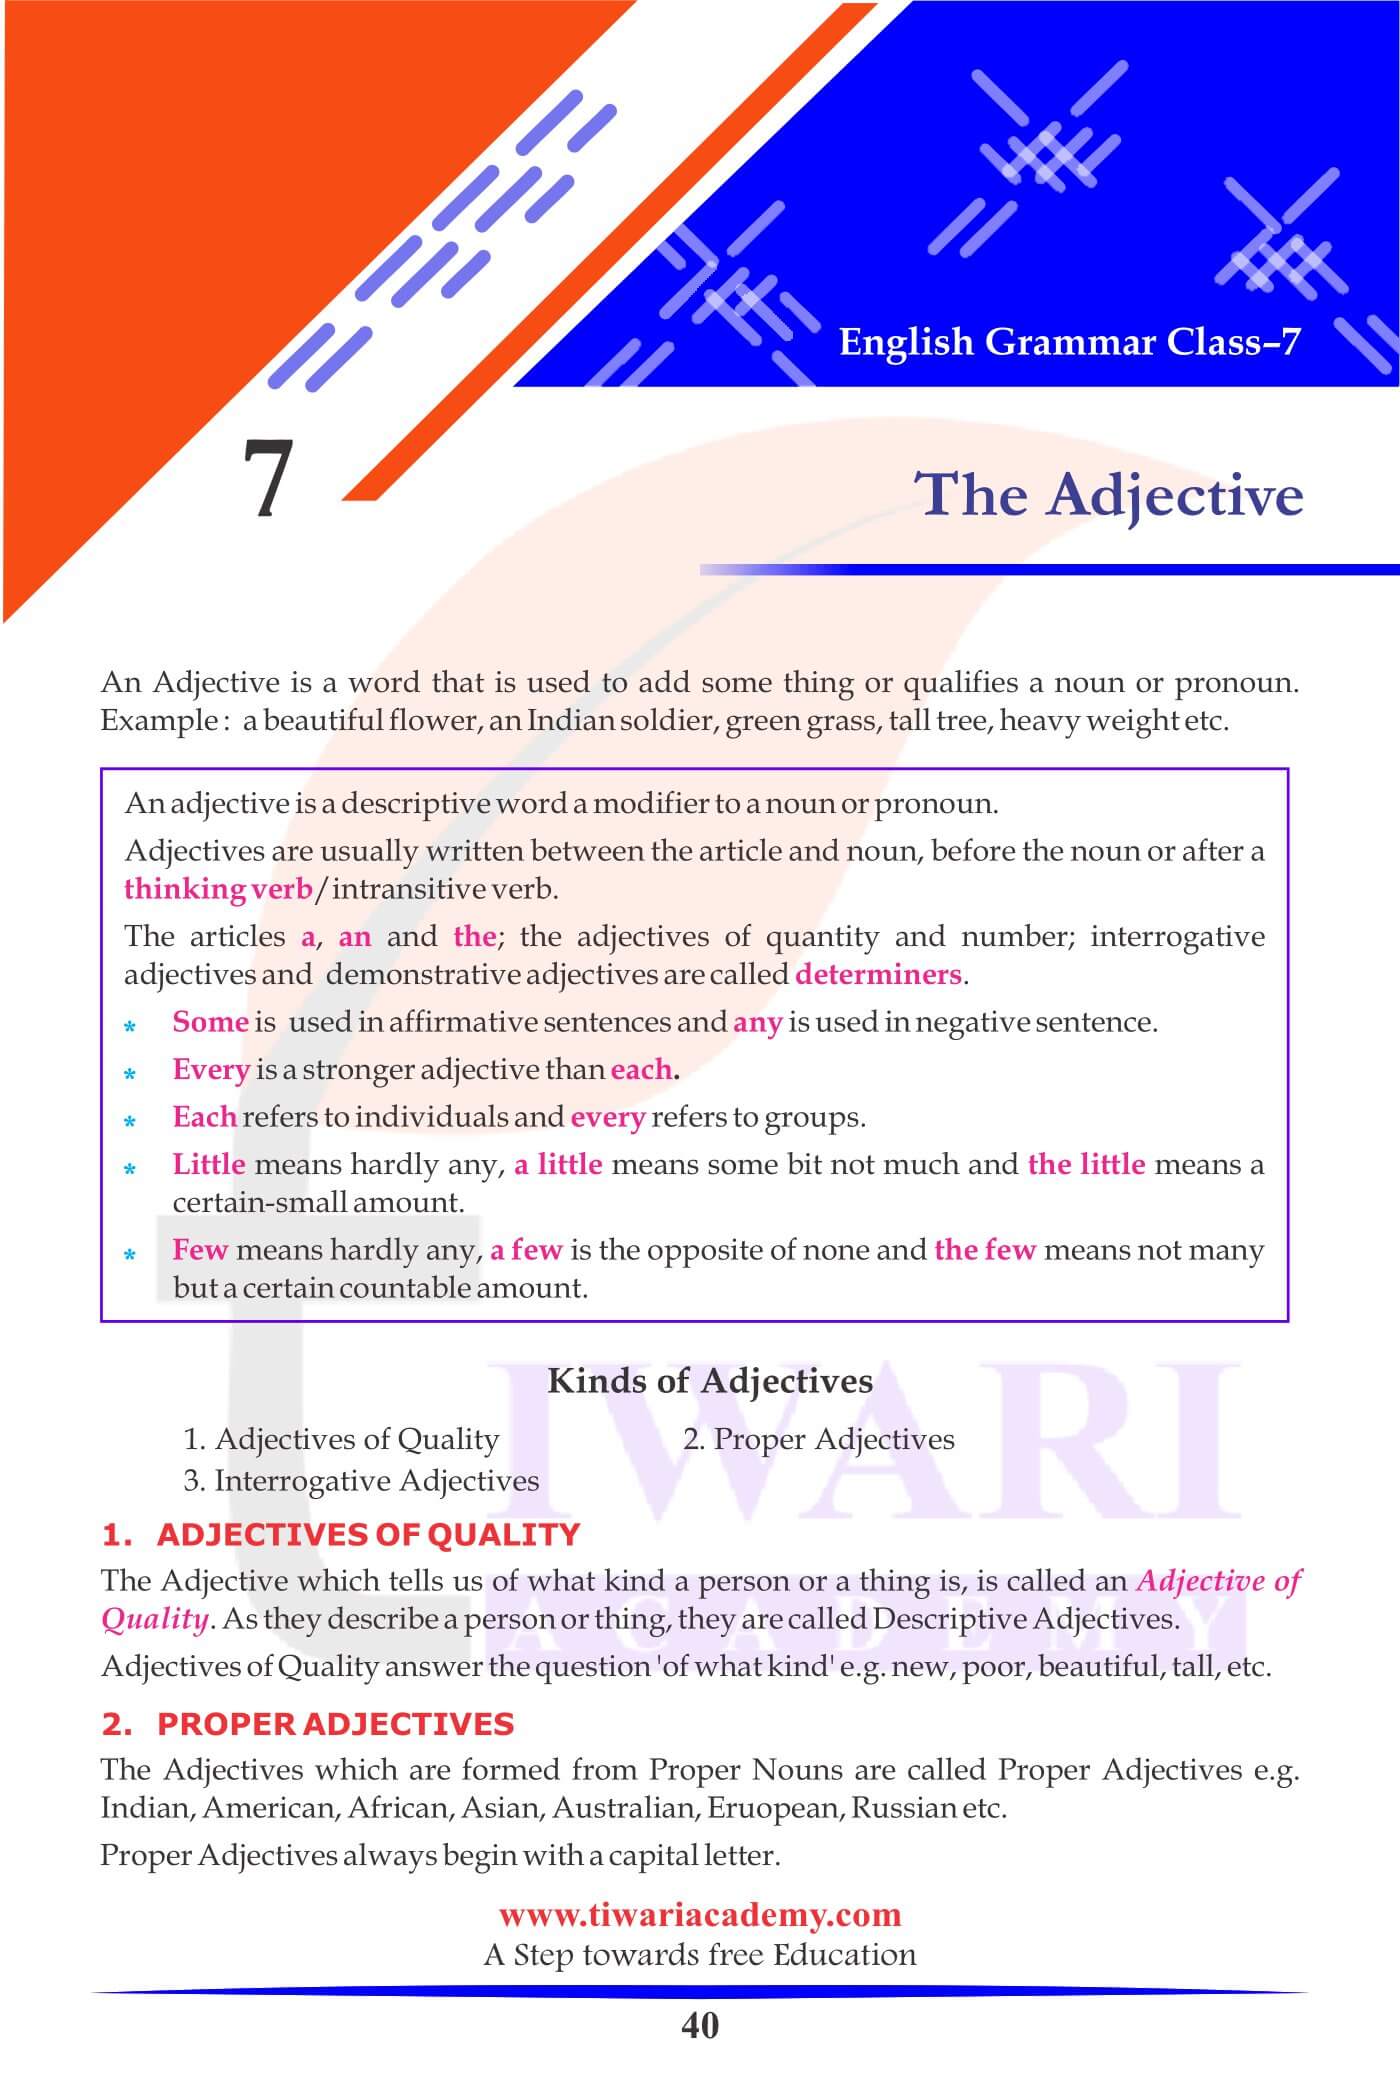 Class 7 English Grammar The Adjective